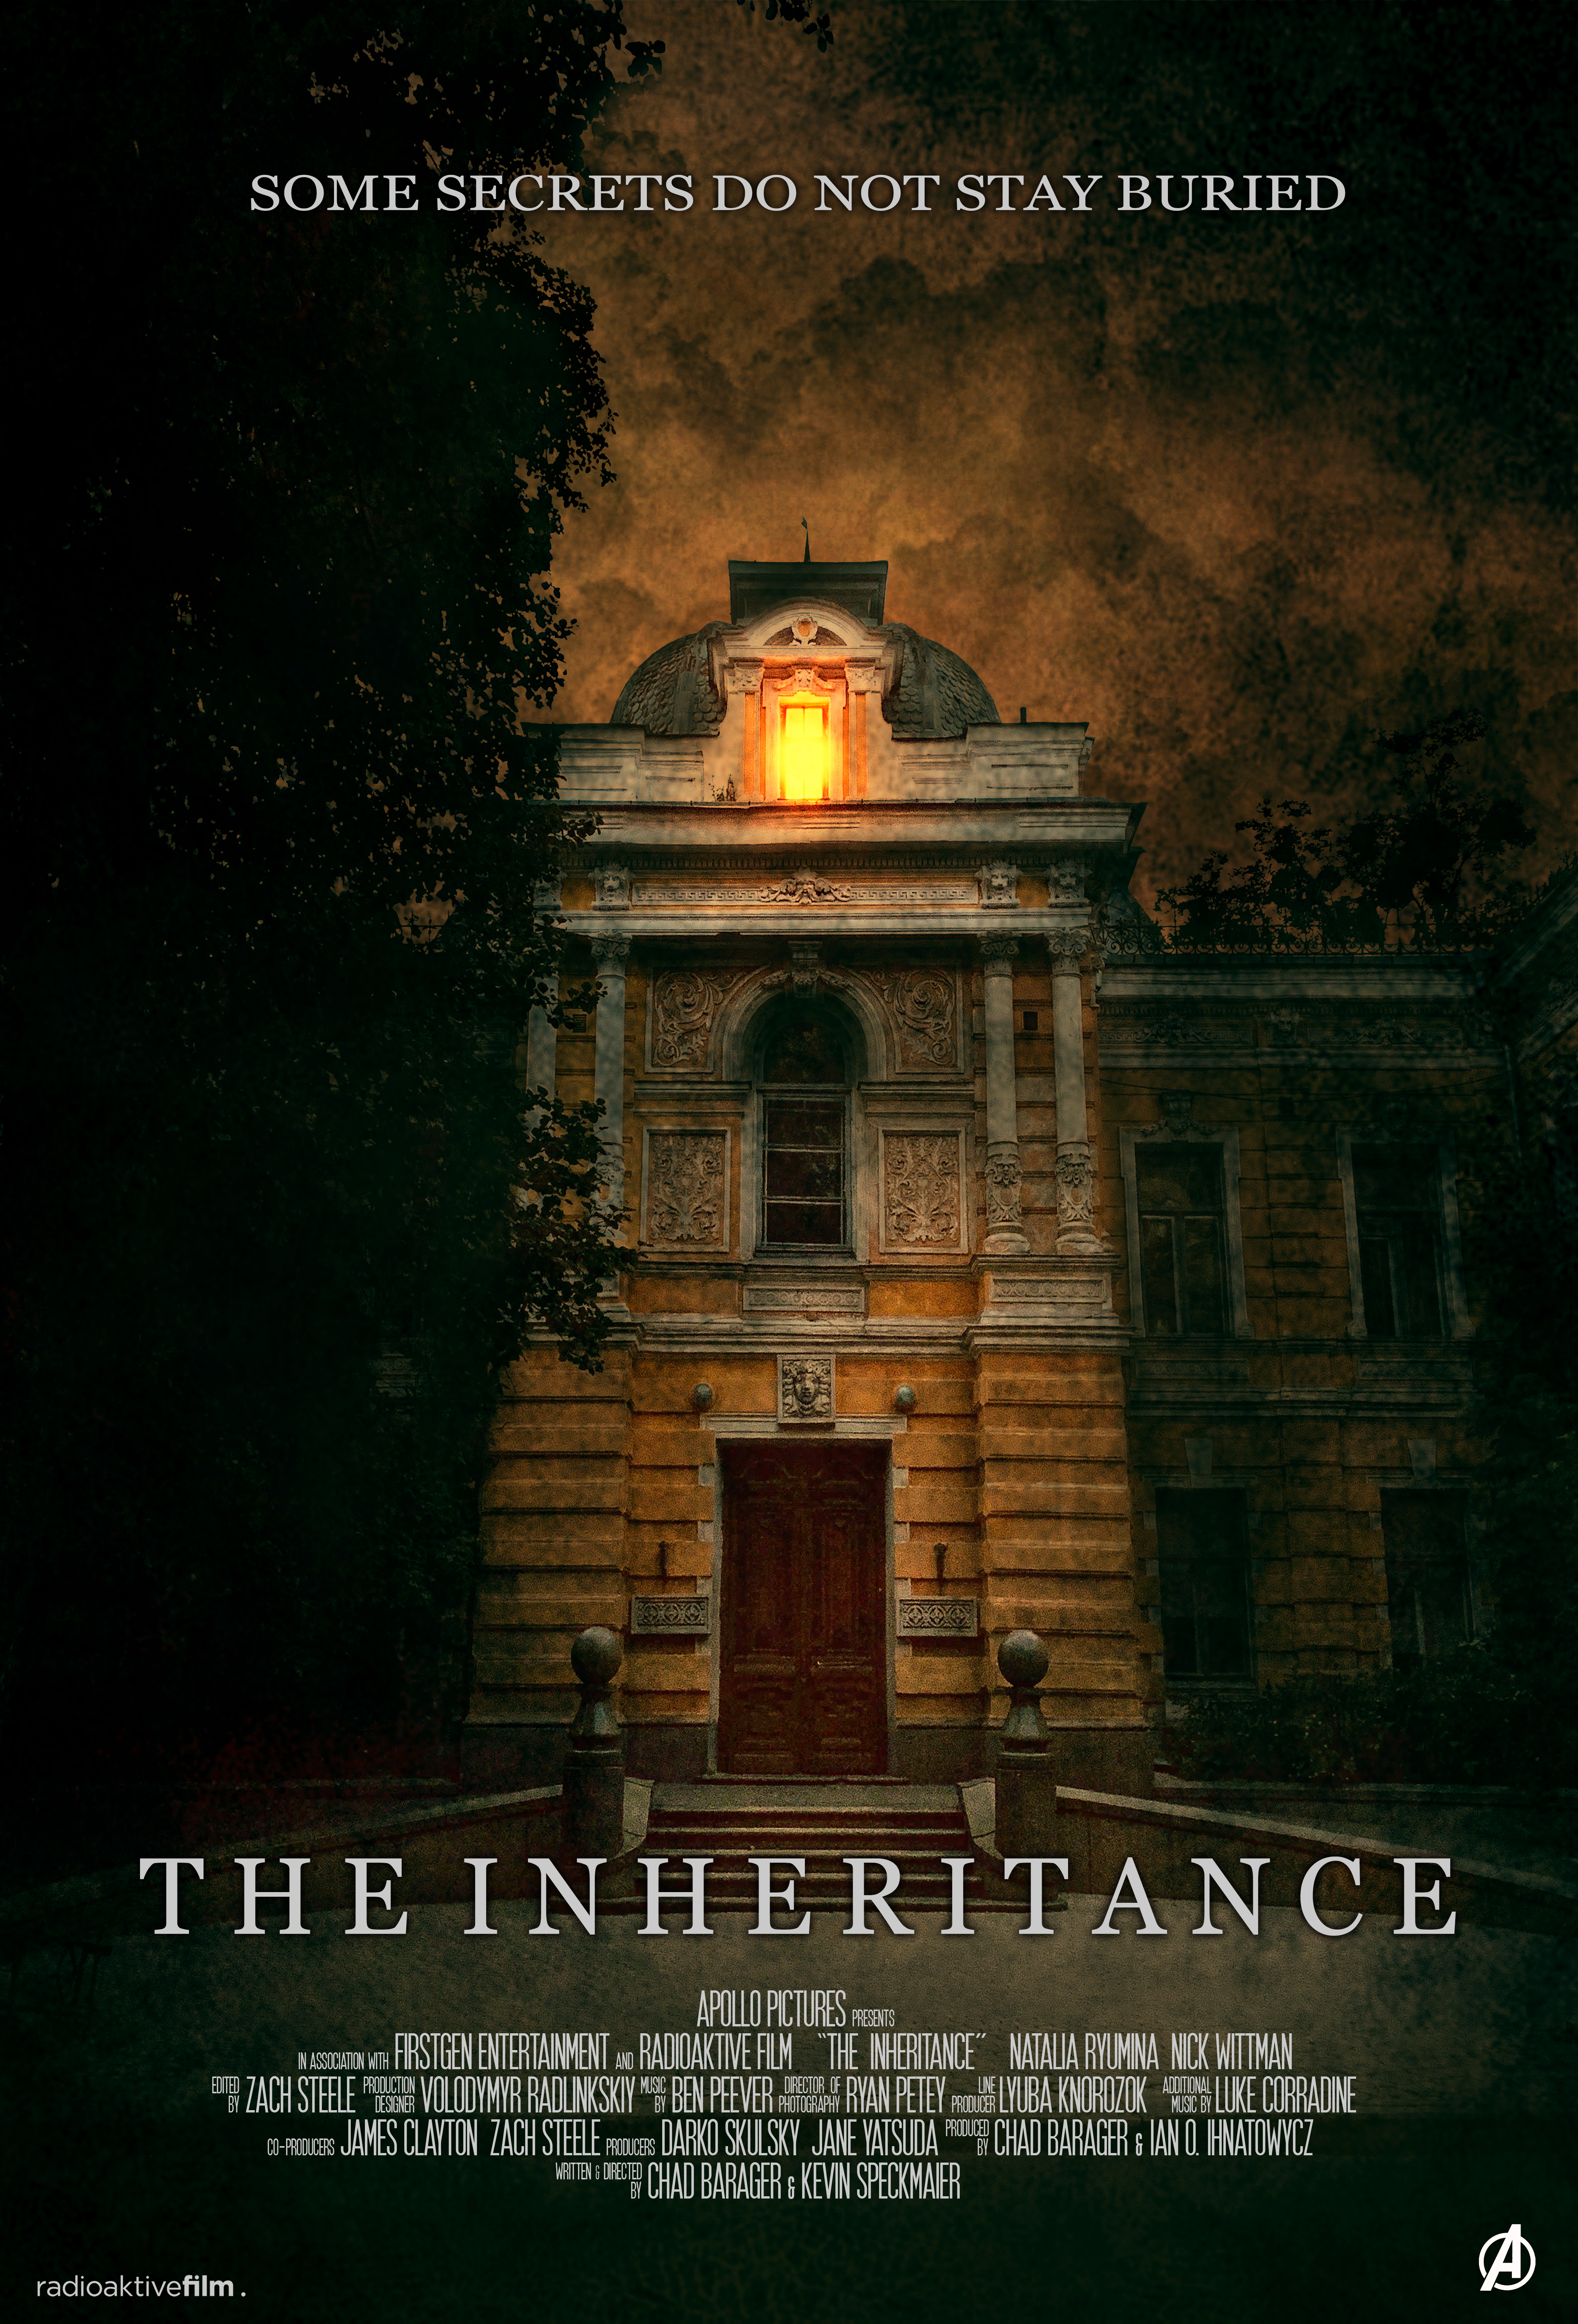 Nonton film The Inheritance layarkaca21 indoxx1 ganool online streaming terbaru